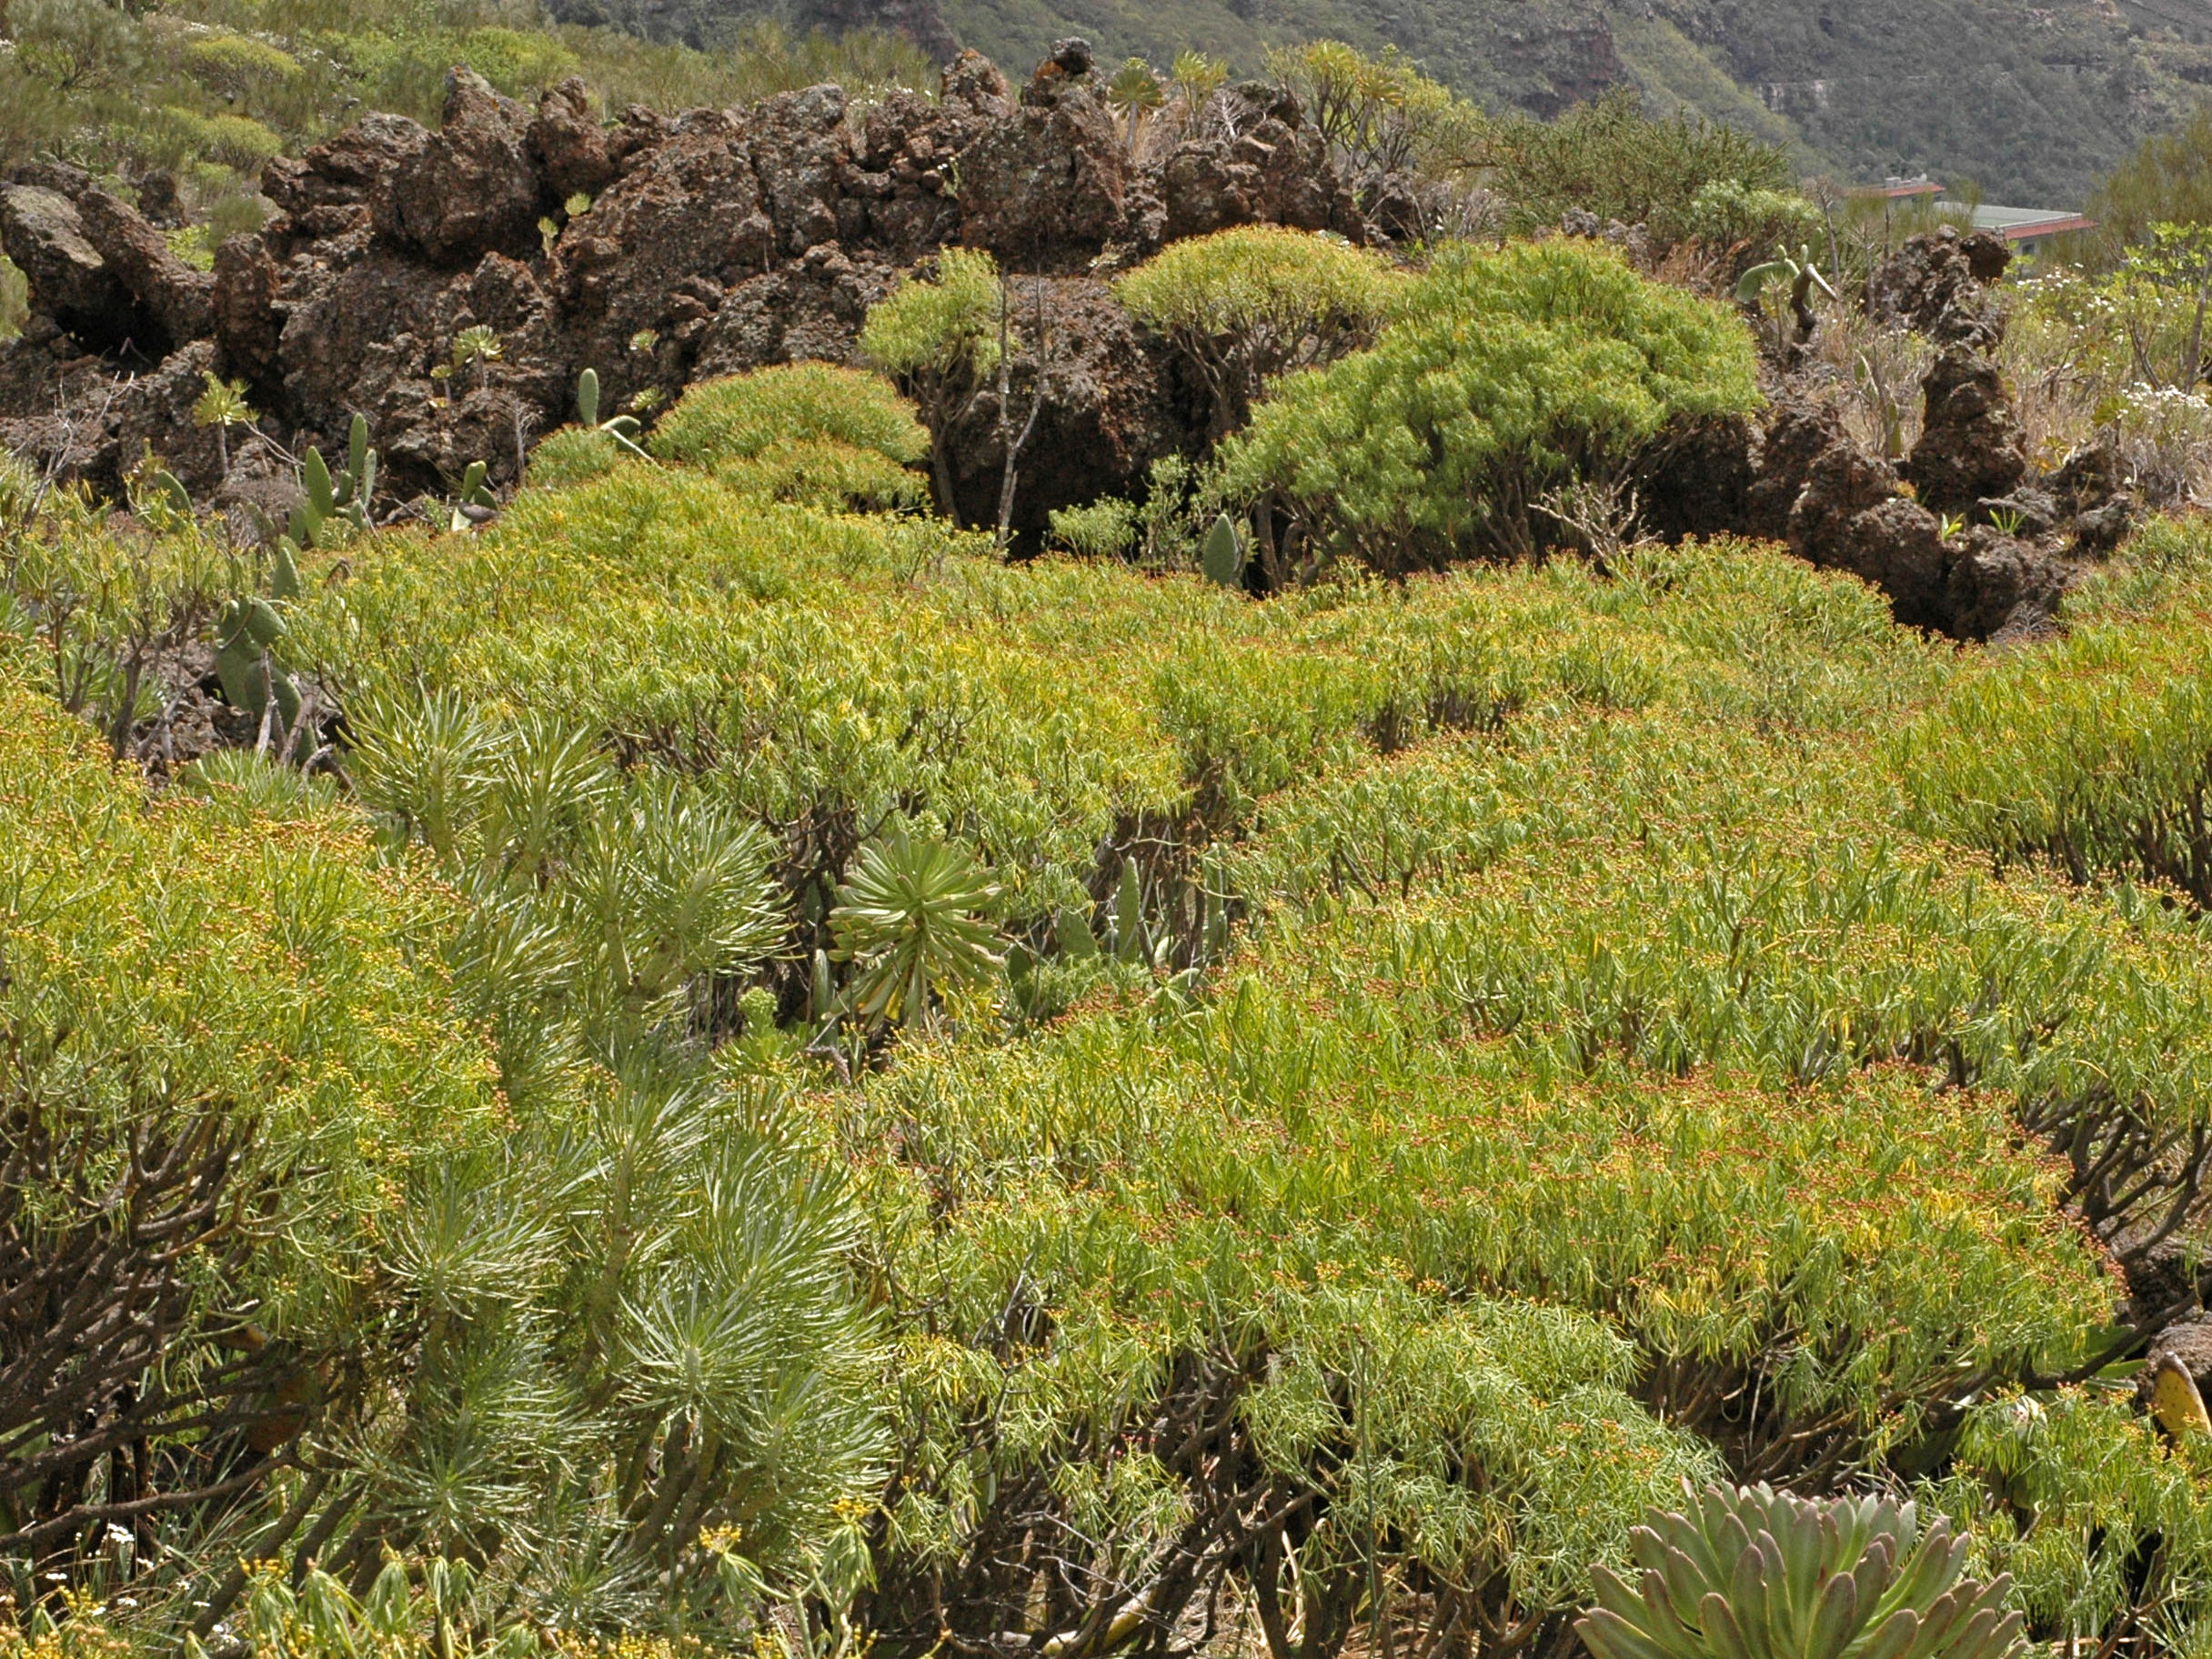 Euphorbia regis-jubae